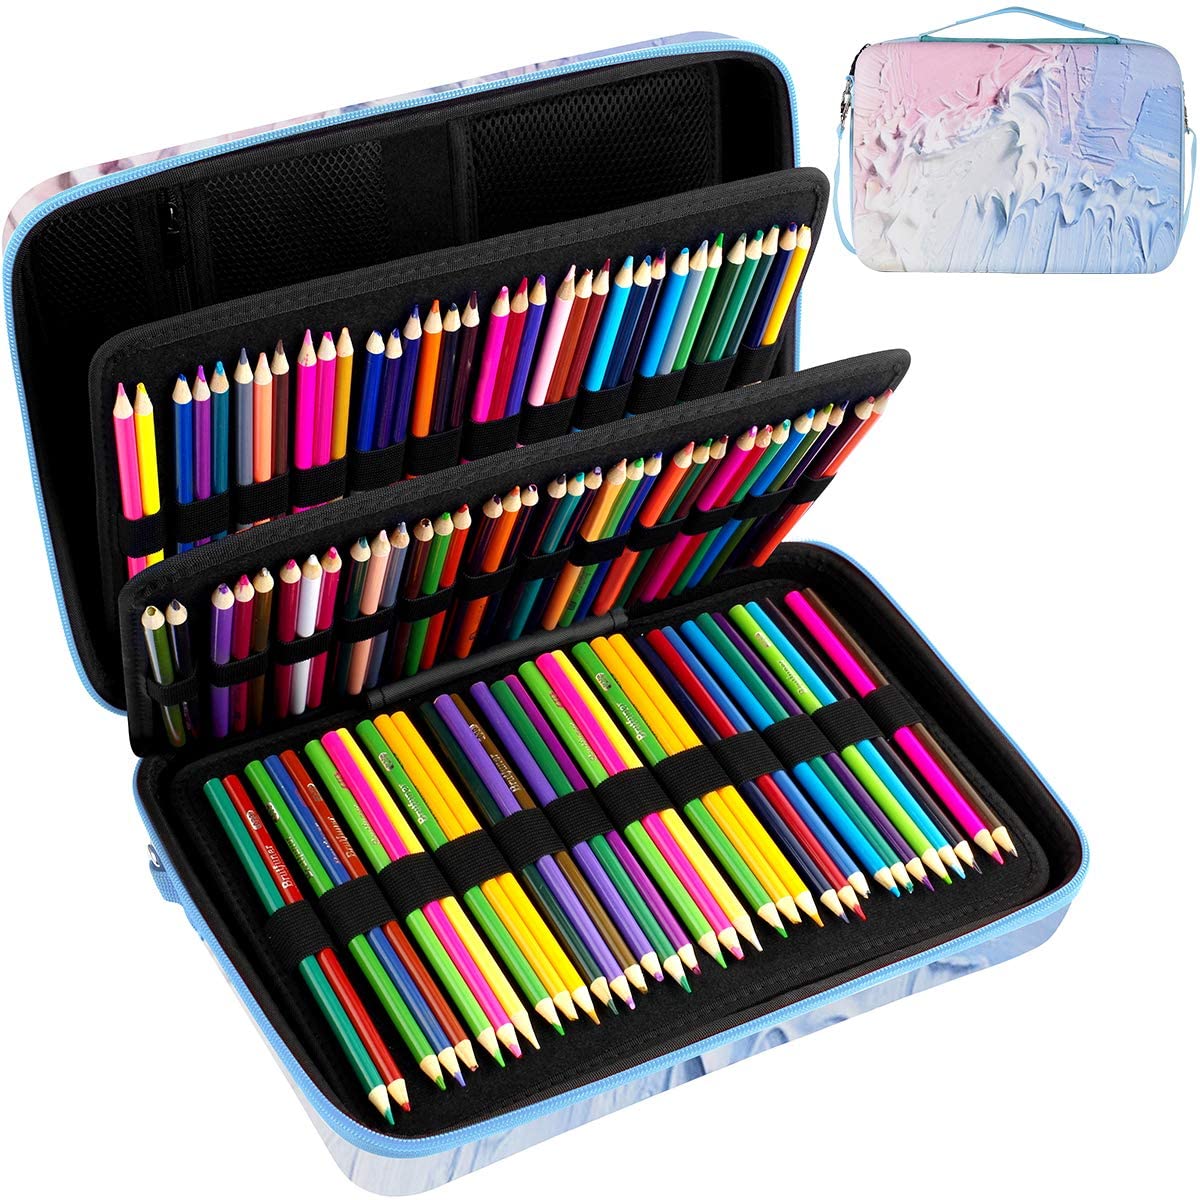 Large Pencil Storage Case - Holds 240+ Colored Pencils, Pencil Bag